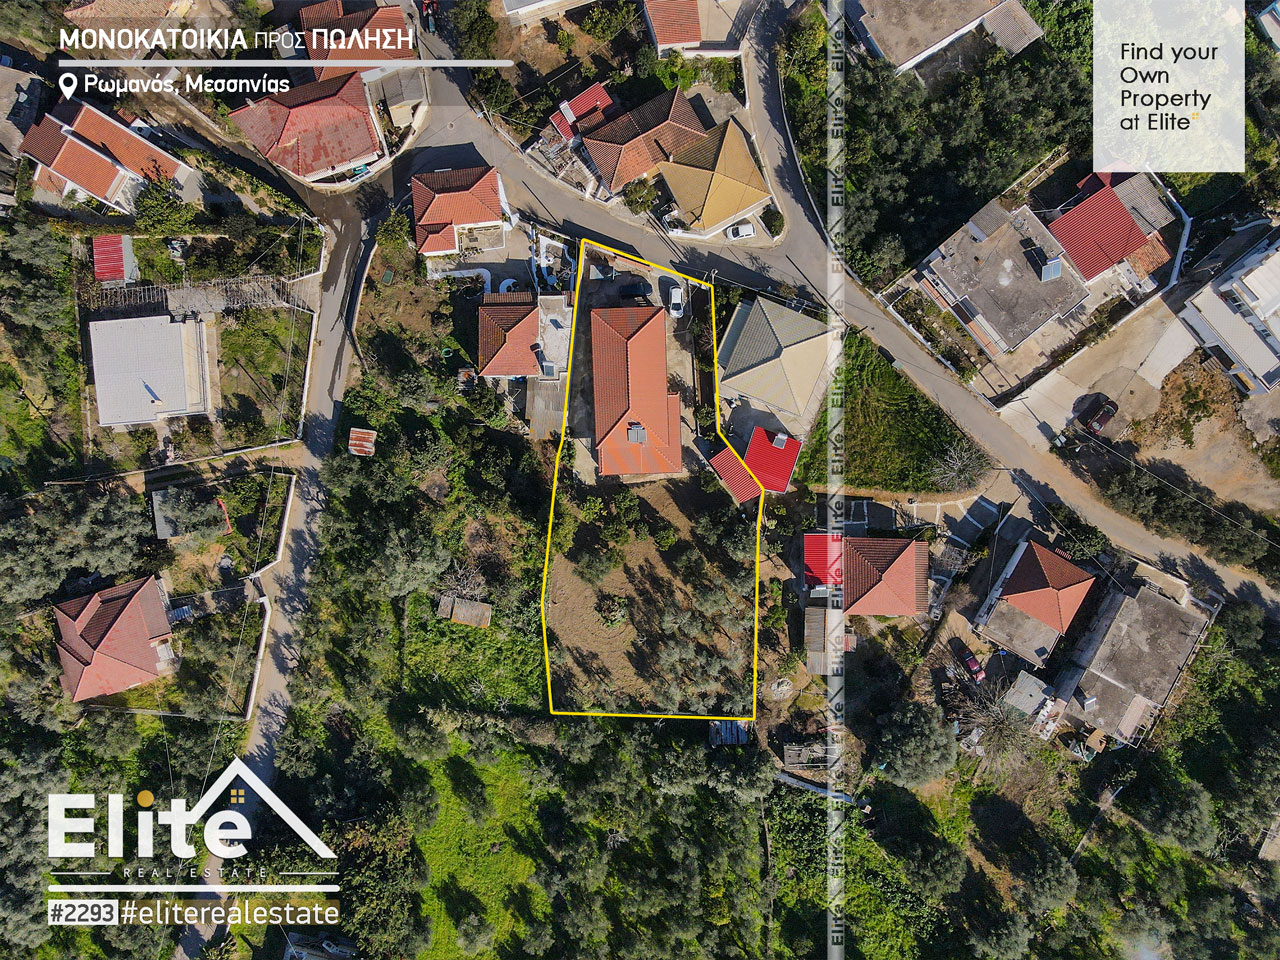 Selling, detached house in Romanos Pylos Nestoros #2293 | ELITE REAL ESTATE